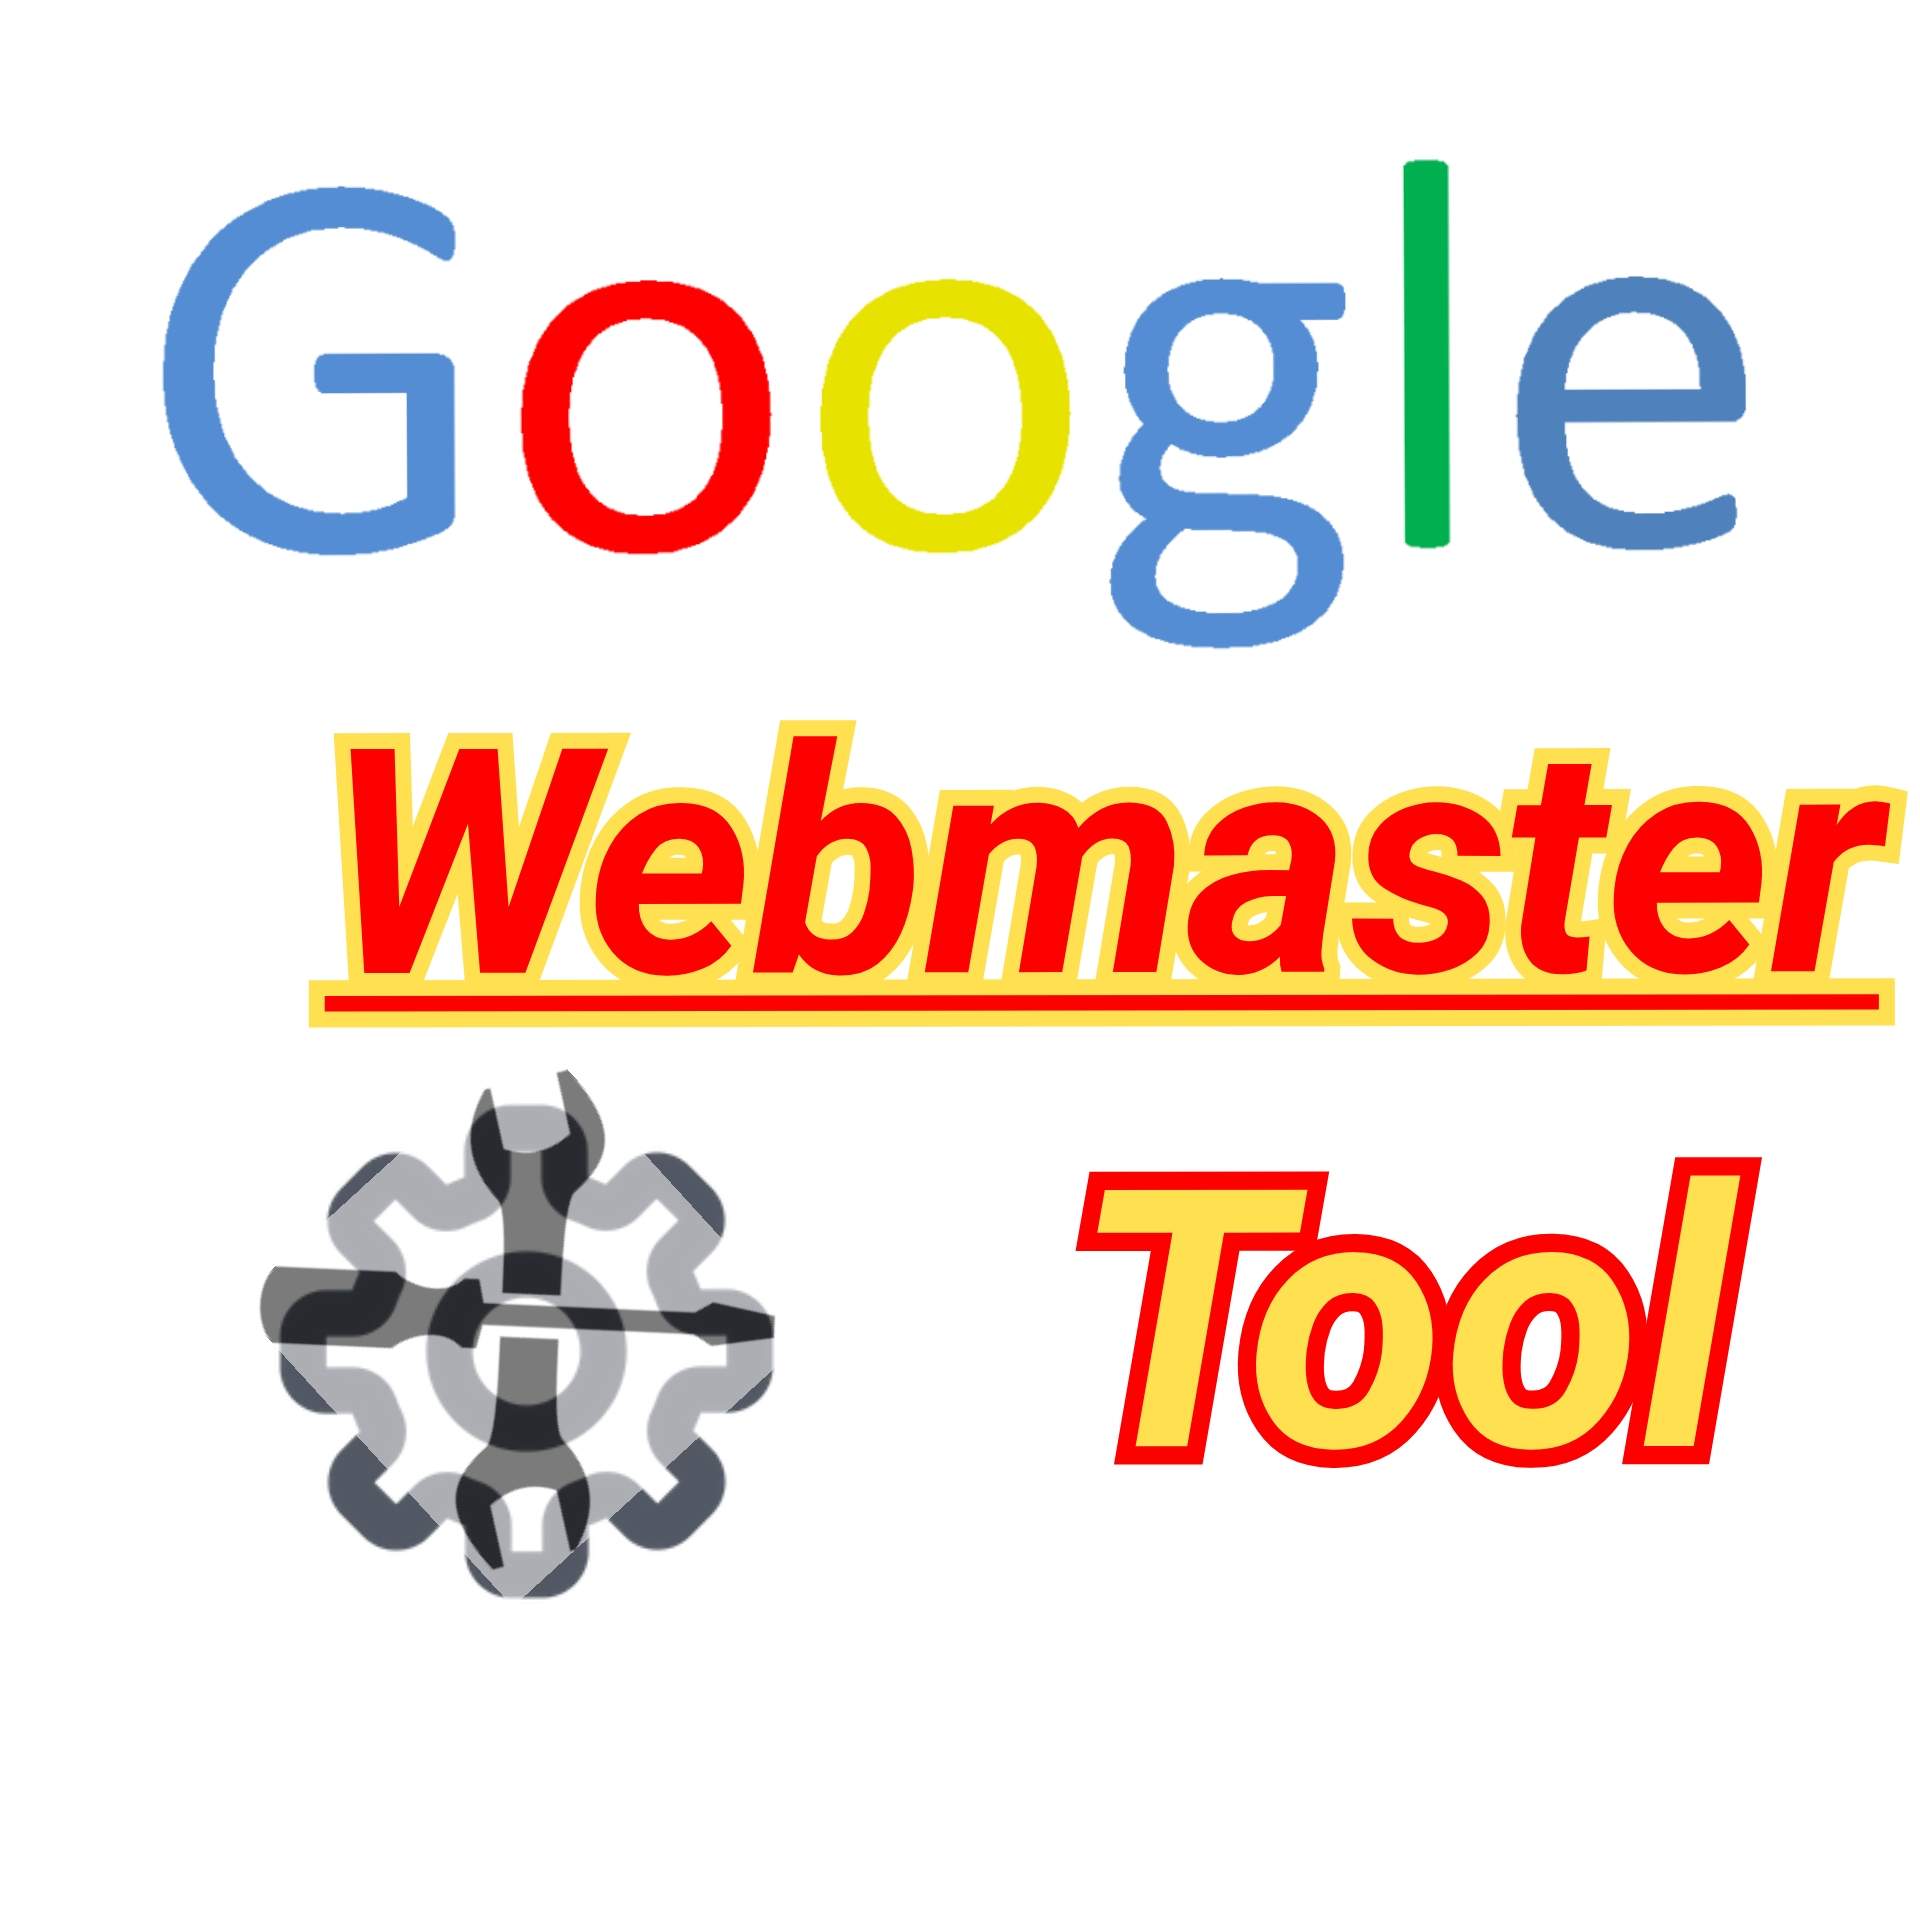 Google webmaster tool